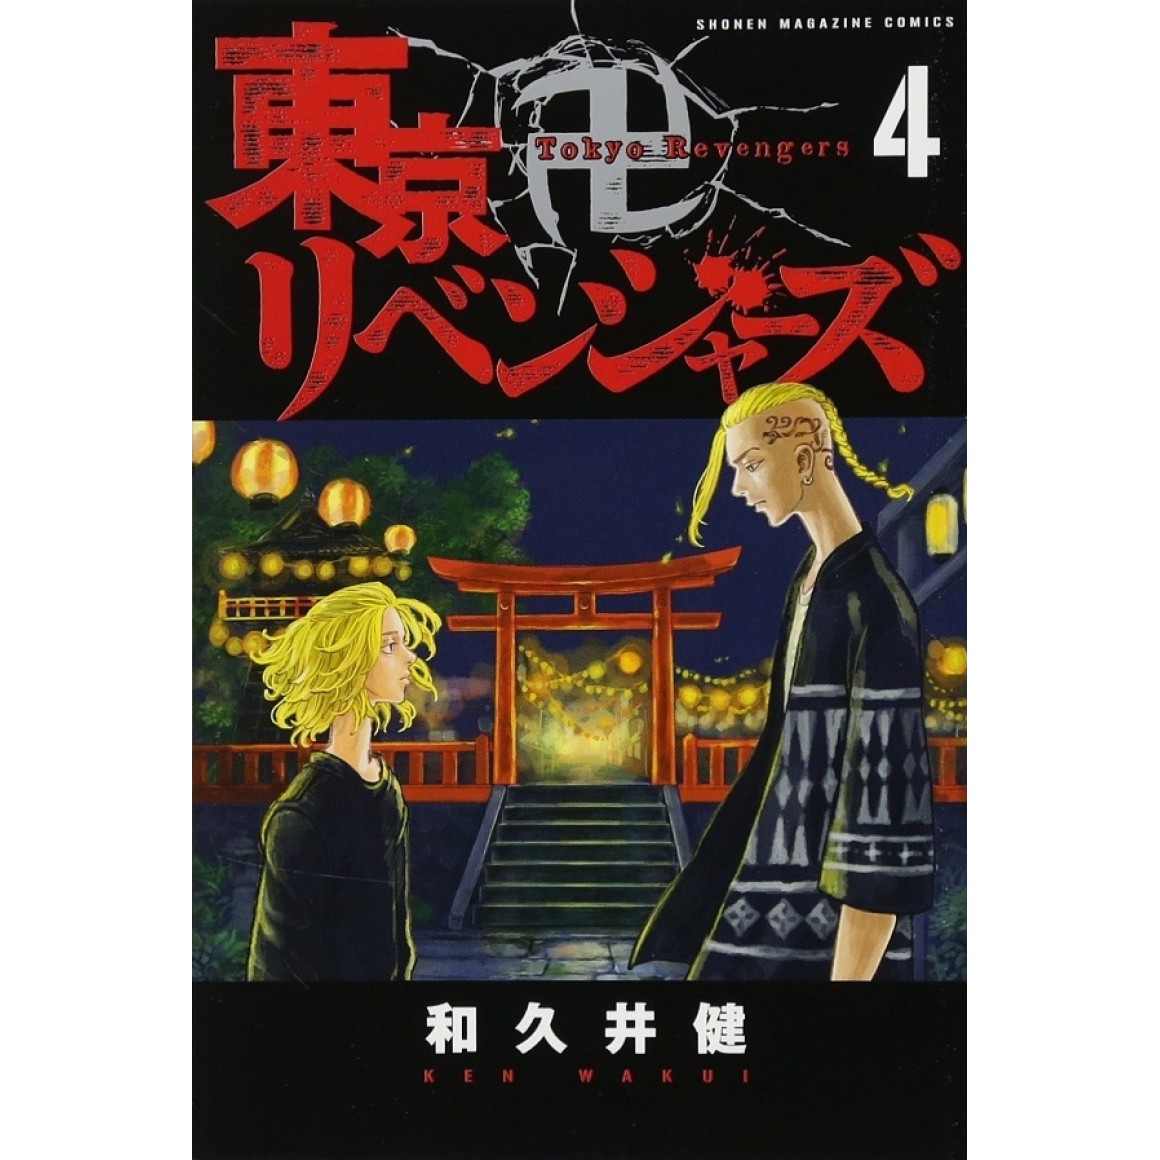 Tokyo Revengers Vol. 23 - ISBN:9784065240281